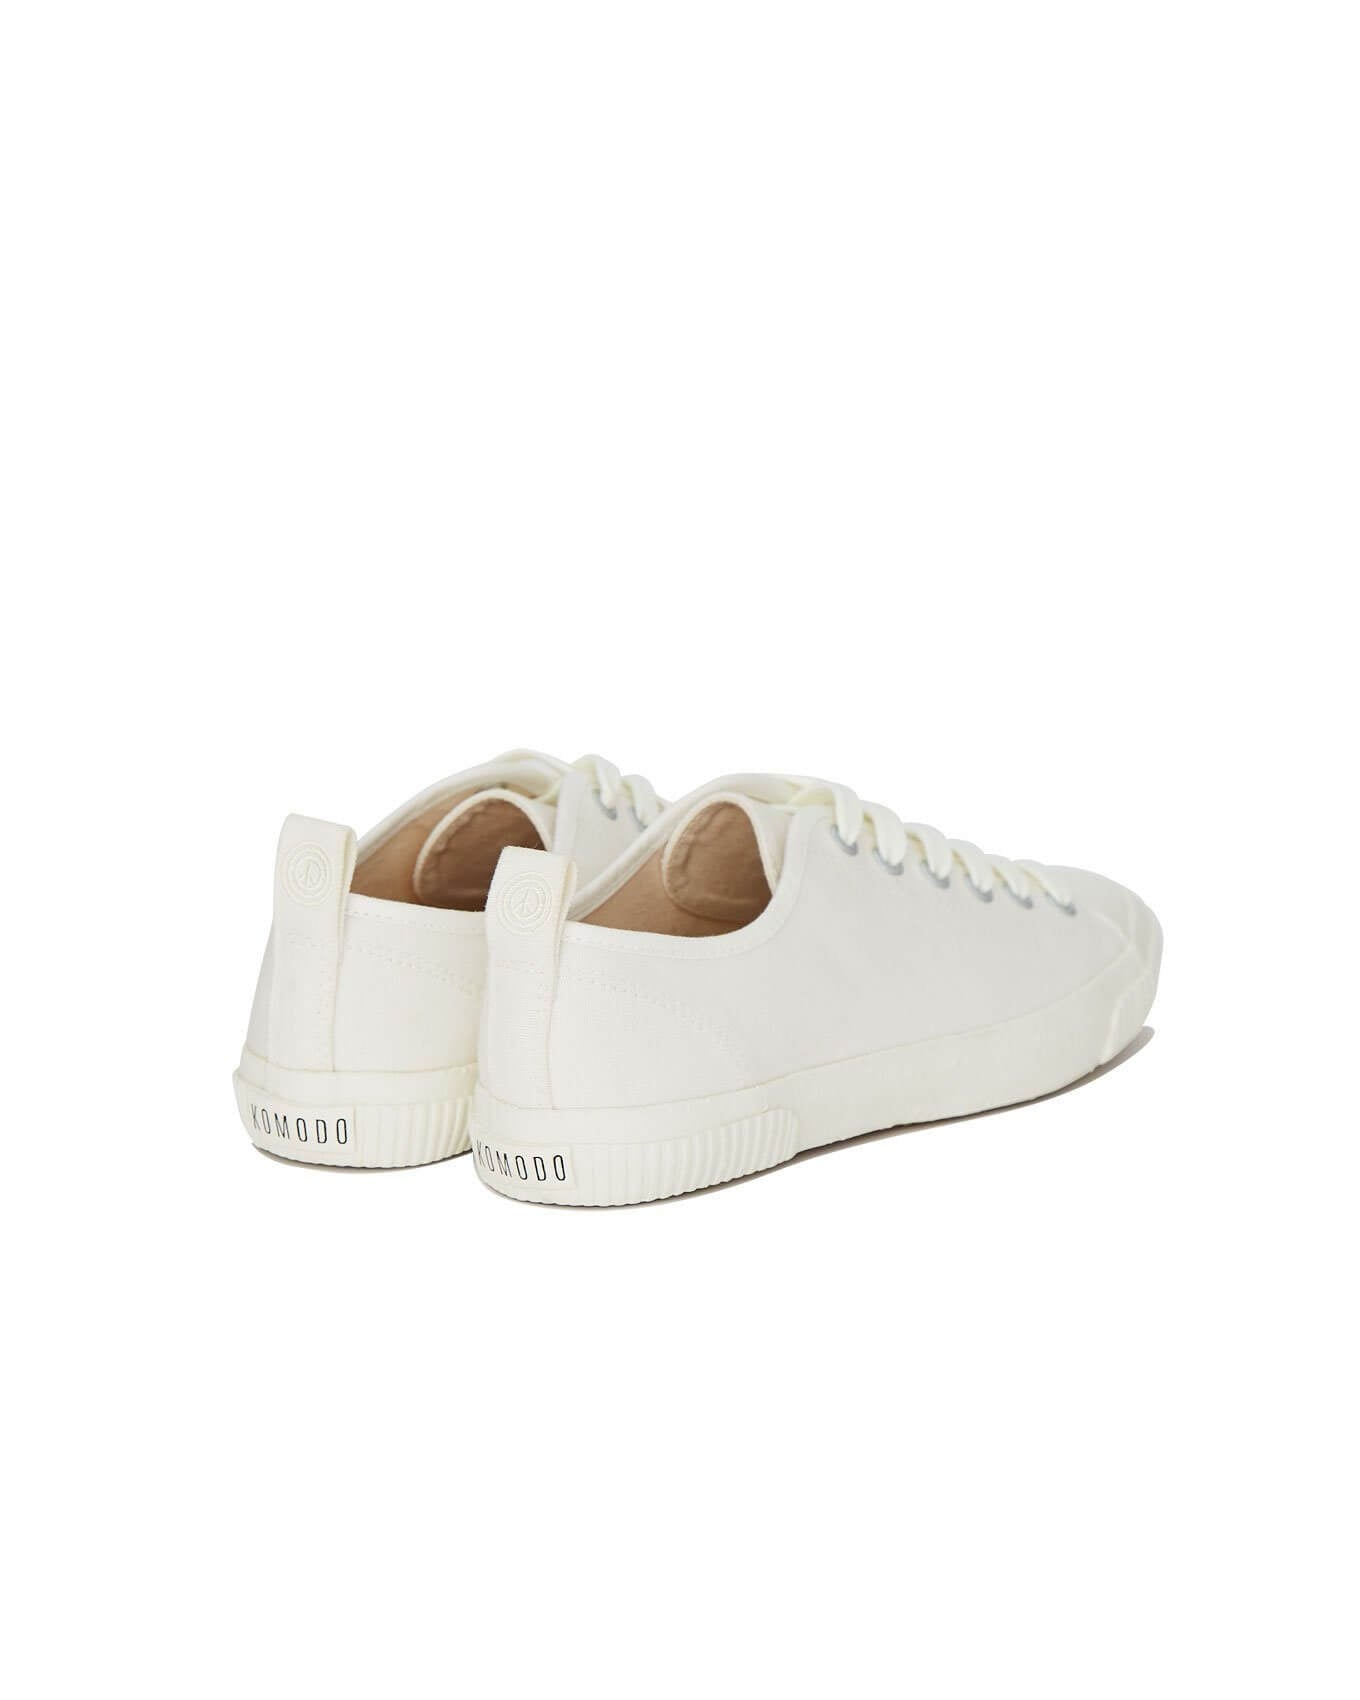 Shoes - ECO SNEAKO - CLASSIC Womens Shoe White 2.0